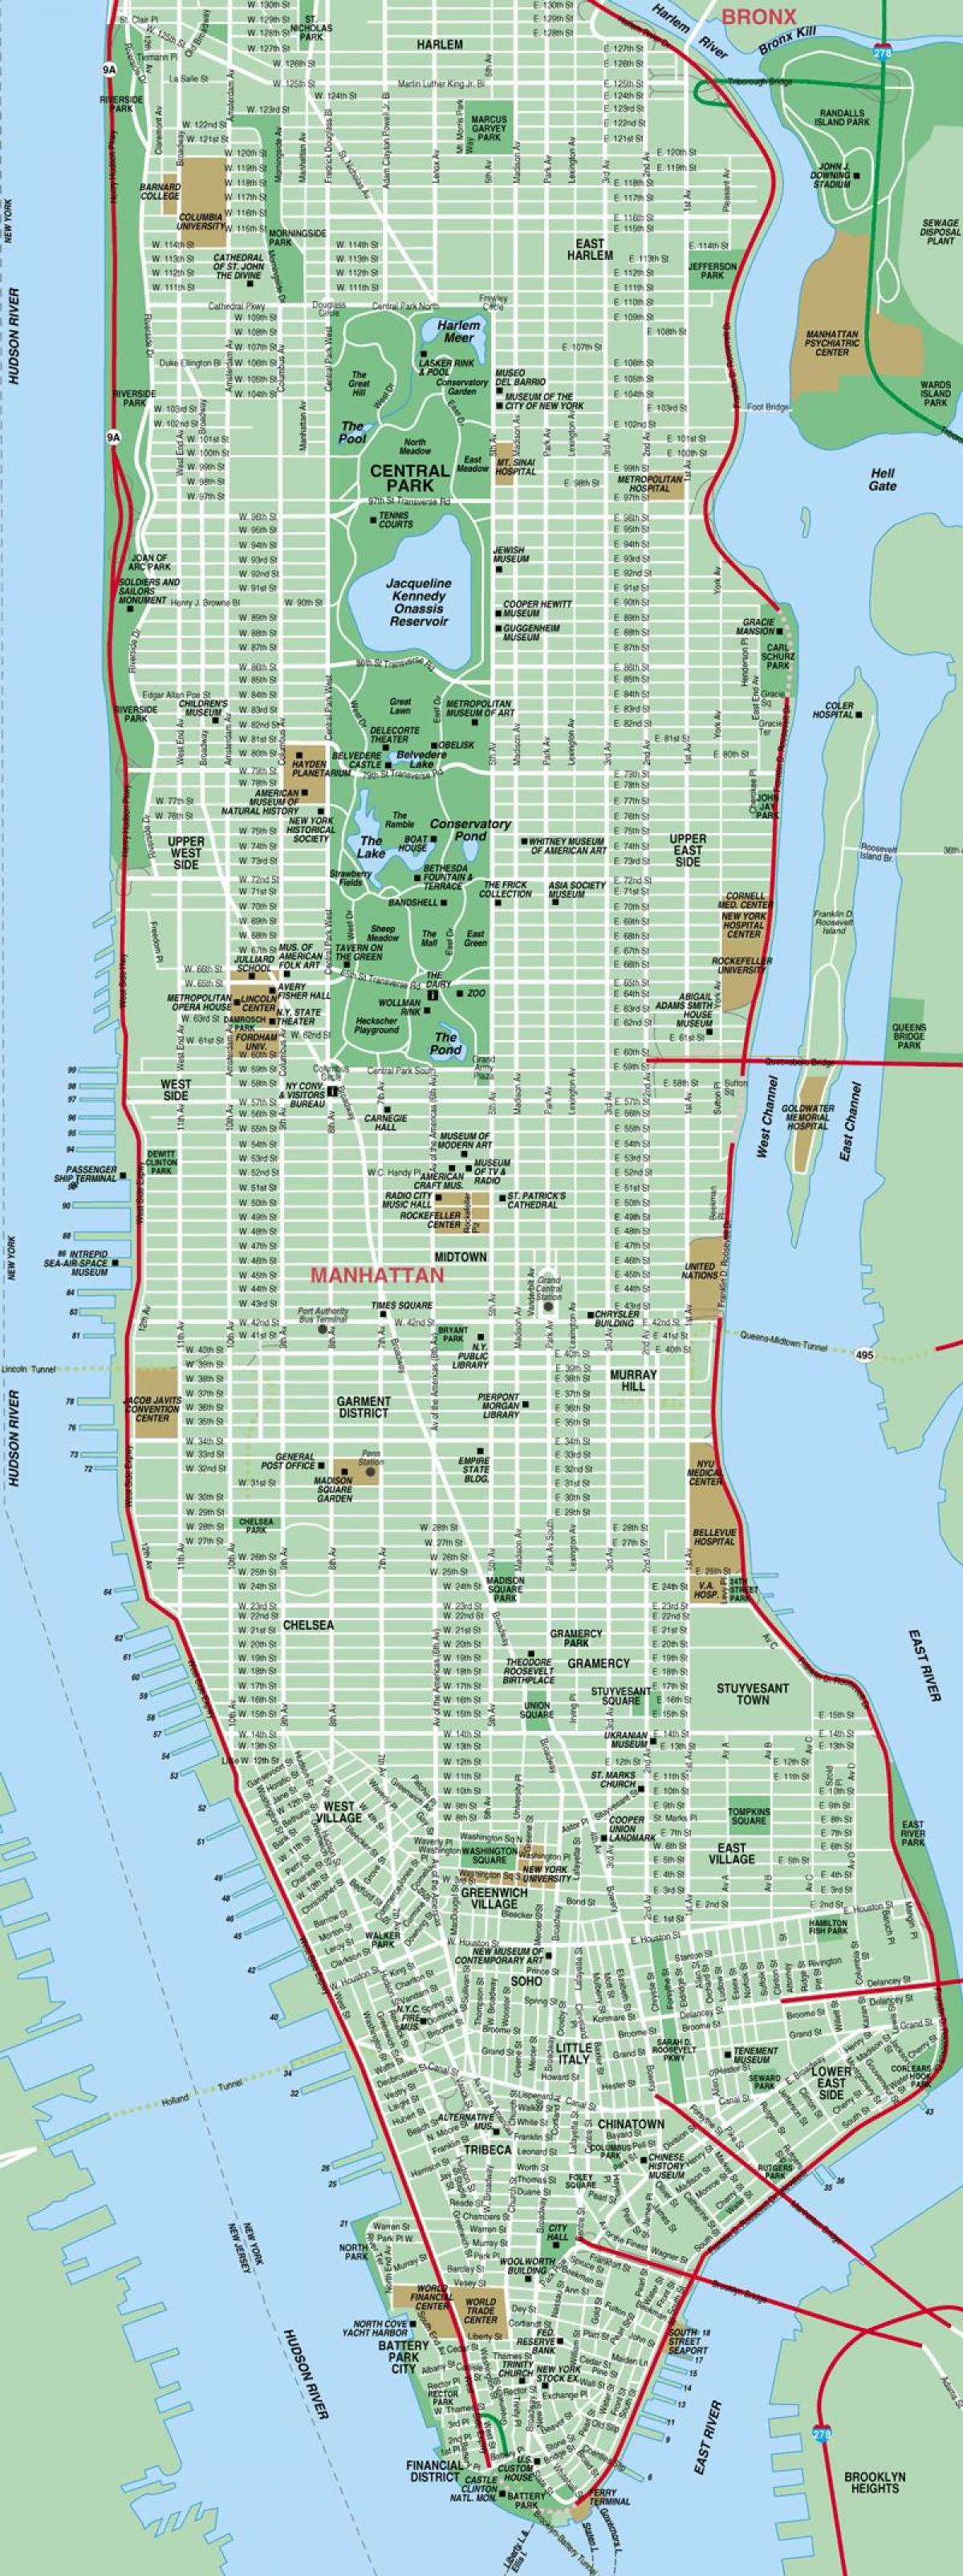 Manhattan rúa mapa alto detalle